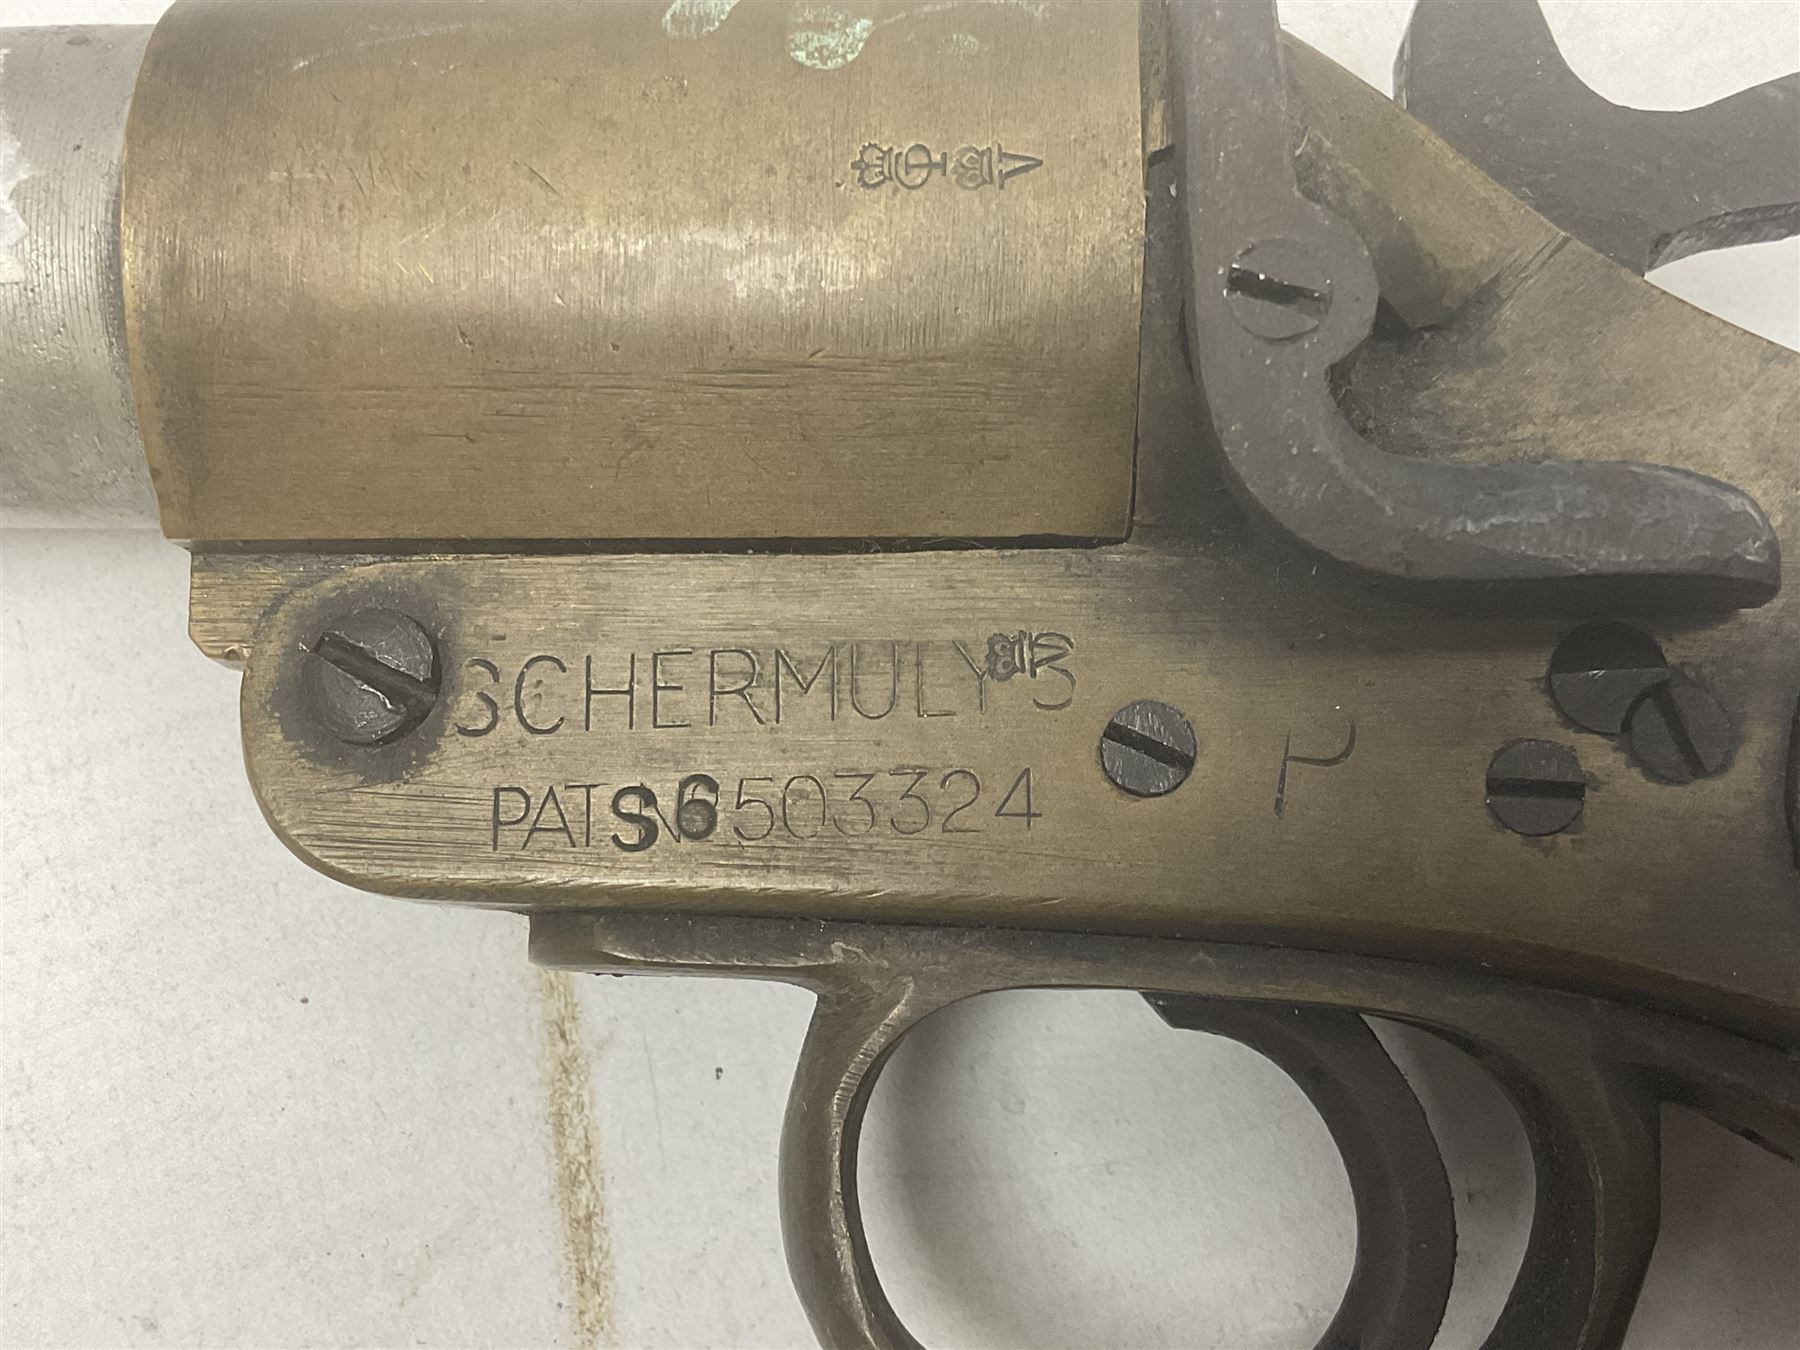 Schermulys patent no.6503324 1" flare/Very pistol - Image 8 of 12